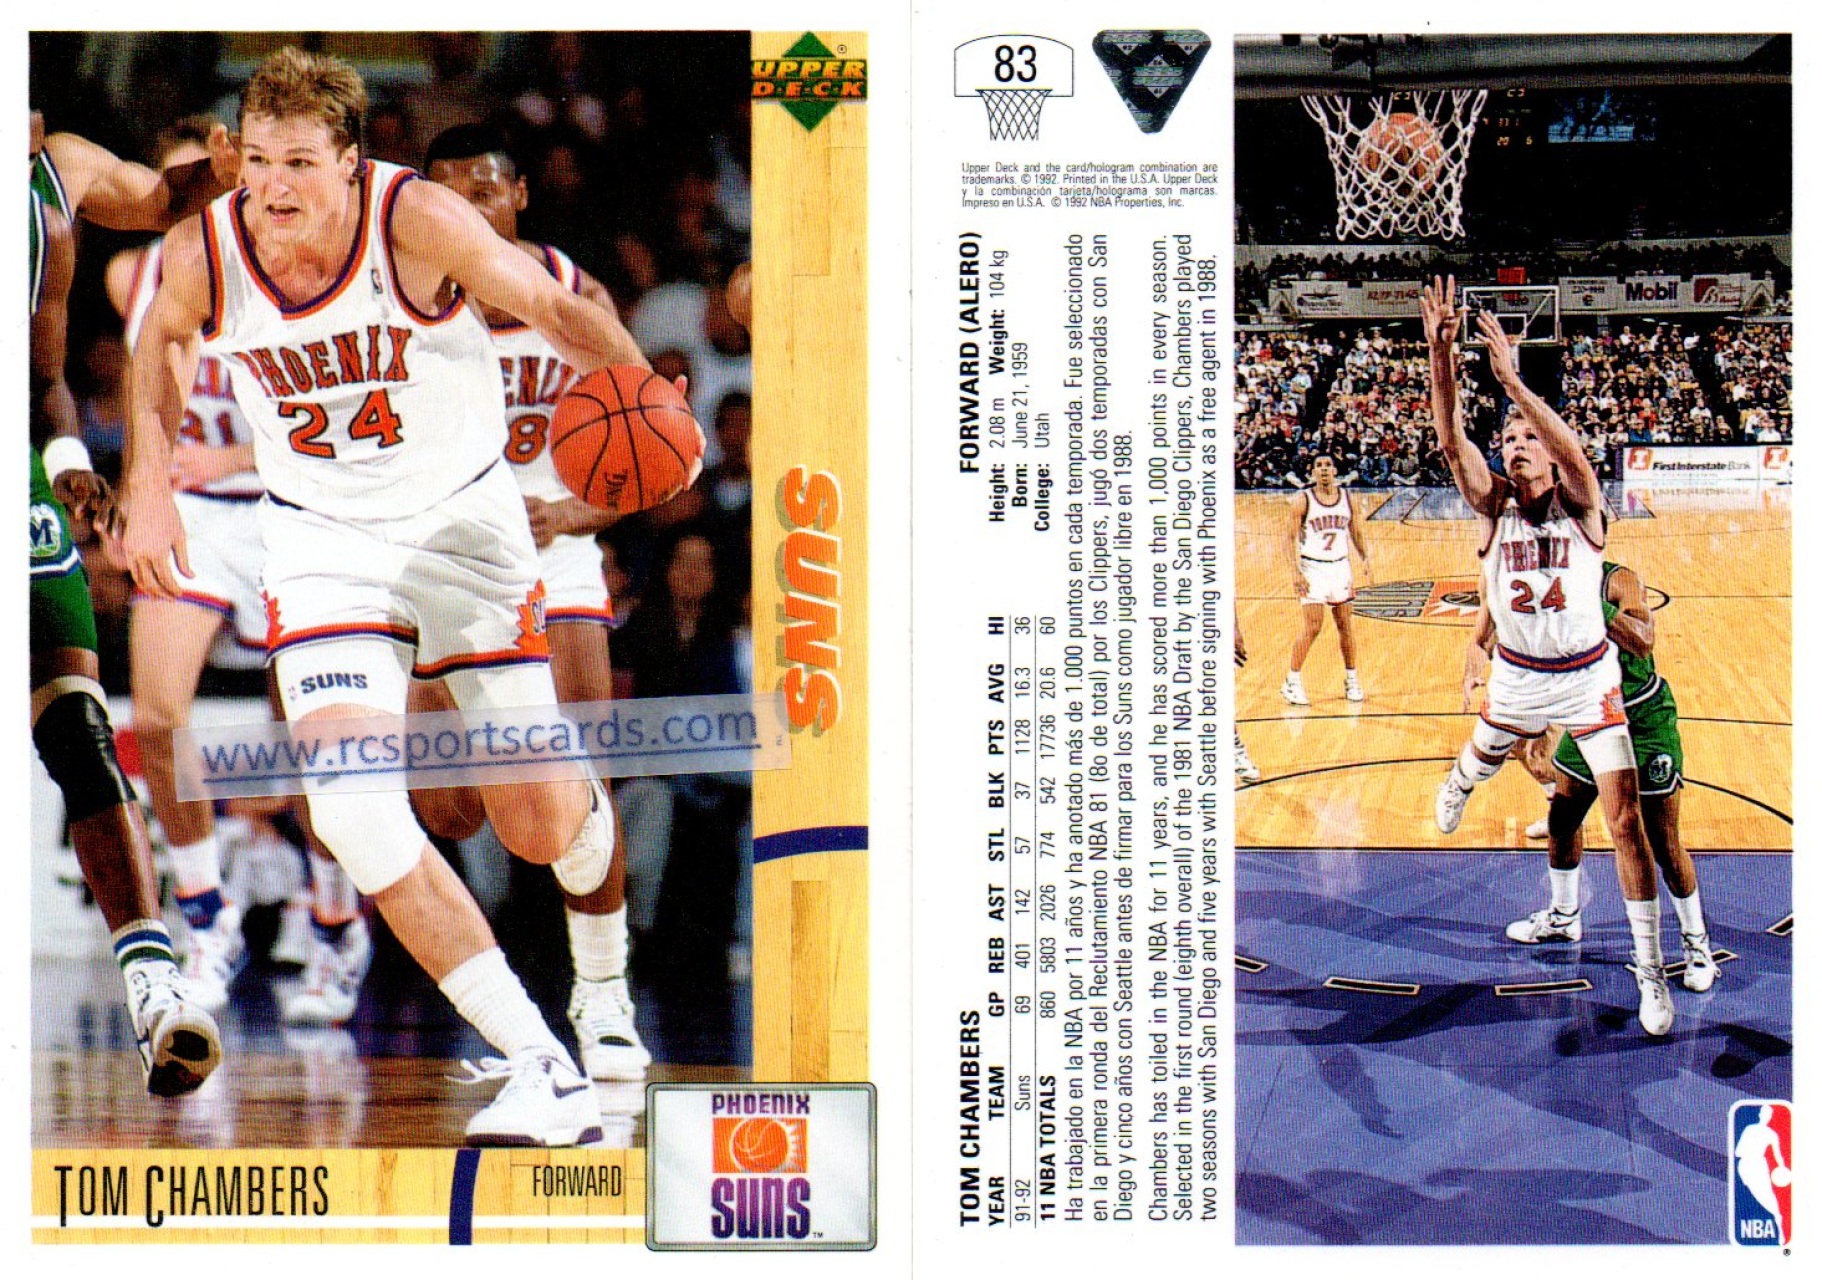  1991-92 Upper Deck Basketball High Series #475 Dan Majerle  Phoenix Suns AS Official NBA Trading Card : Collectibles & Fine Art